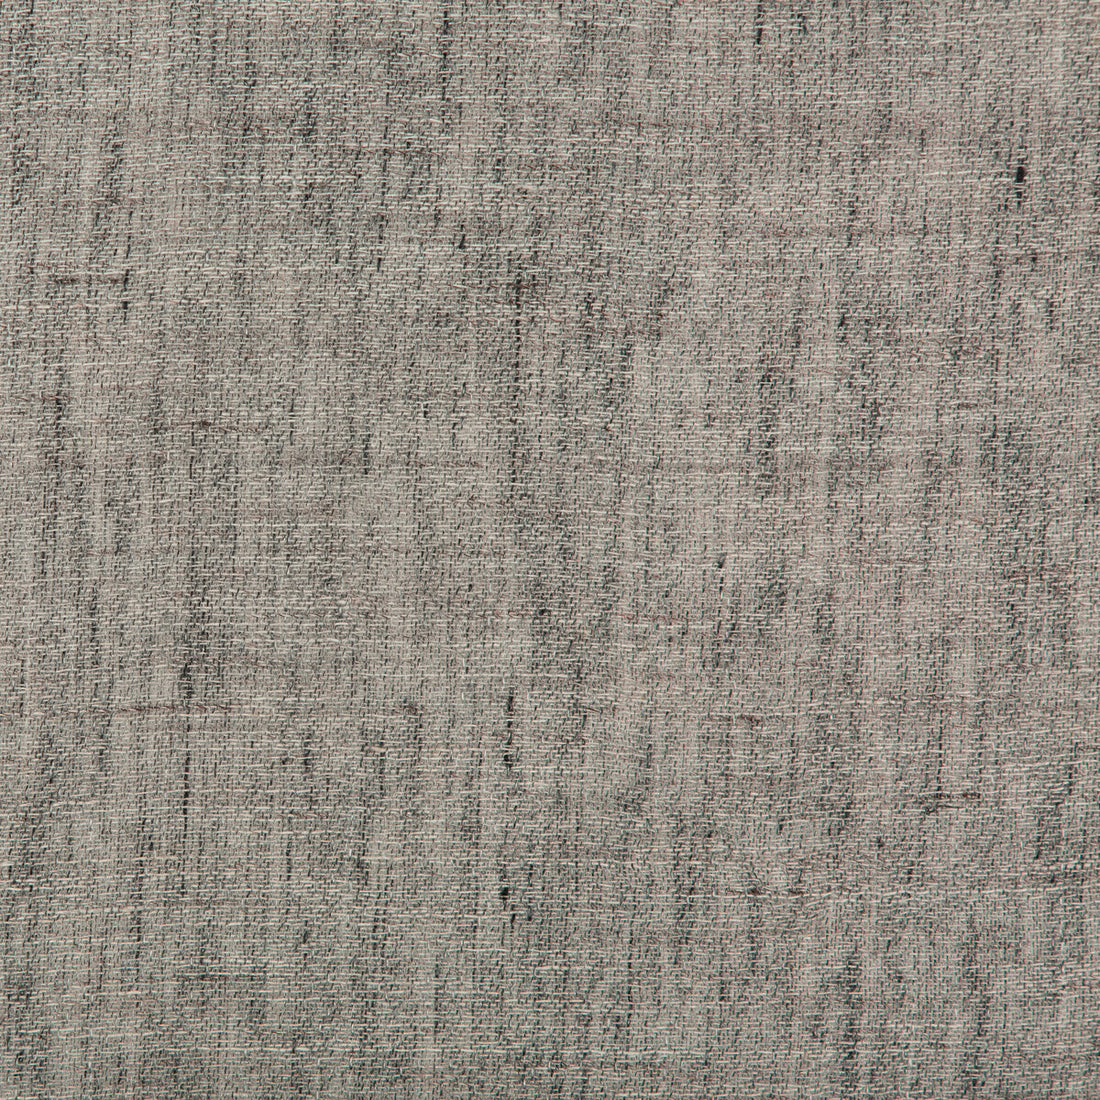 Amalgam Linen fabric in castor color - pattern 4614.11.0 - by Kravet Design in the Nate Berkus Well-Traveled collection